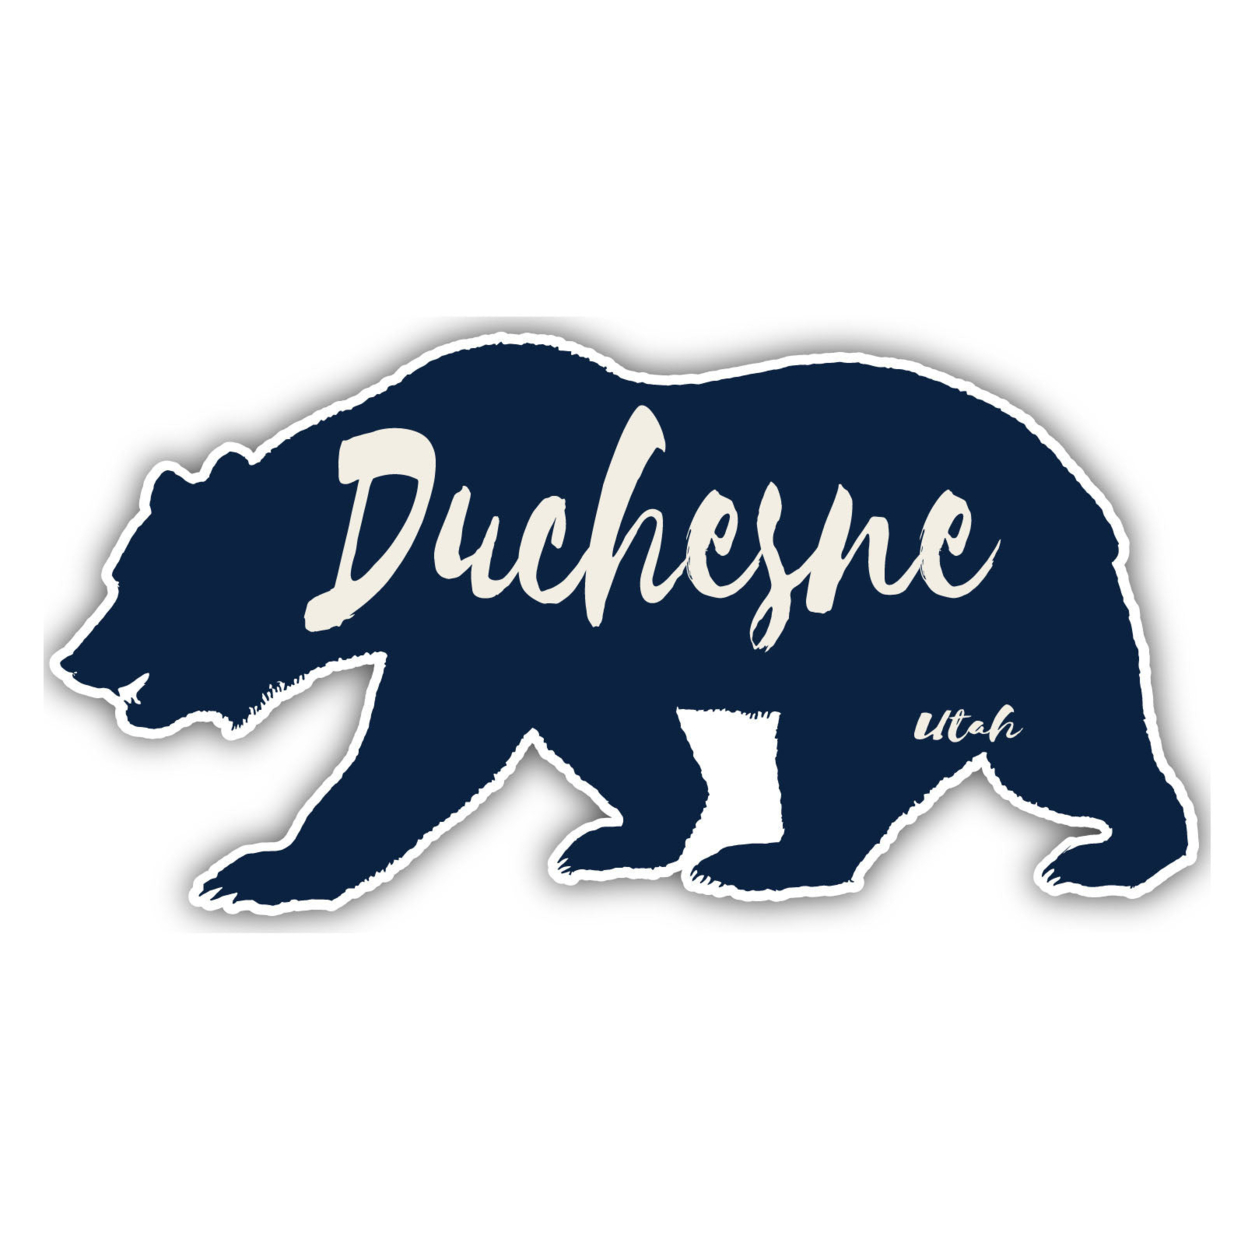 Duchesne Utah Souvenir Decorative Stickers (Choose Theme And Size) - Single Unit, 4-Inch, Bear